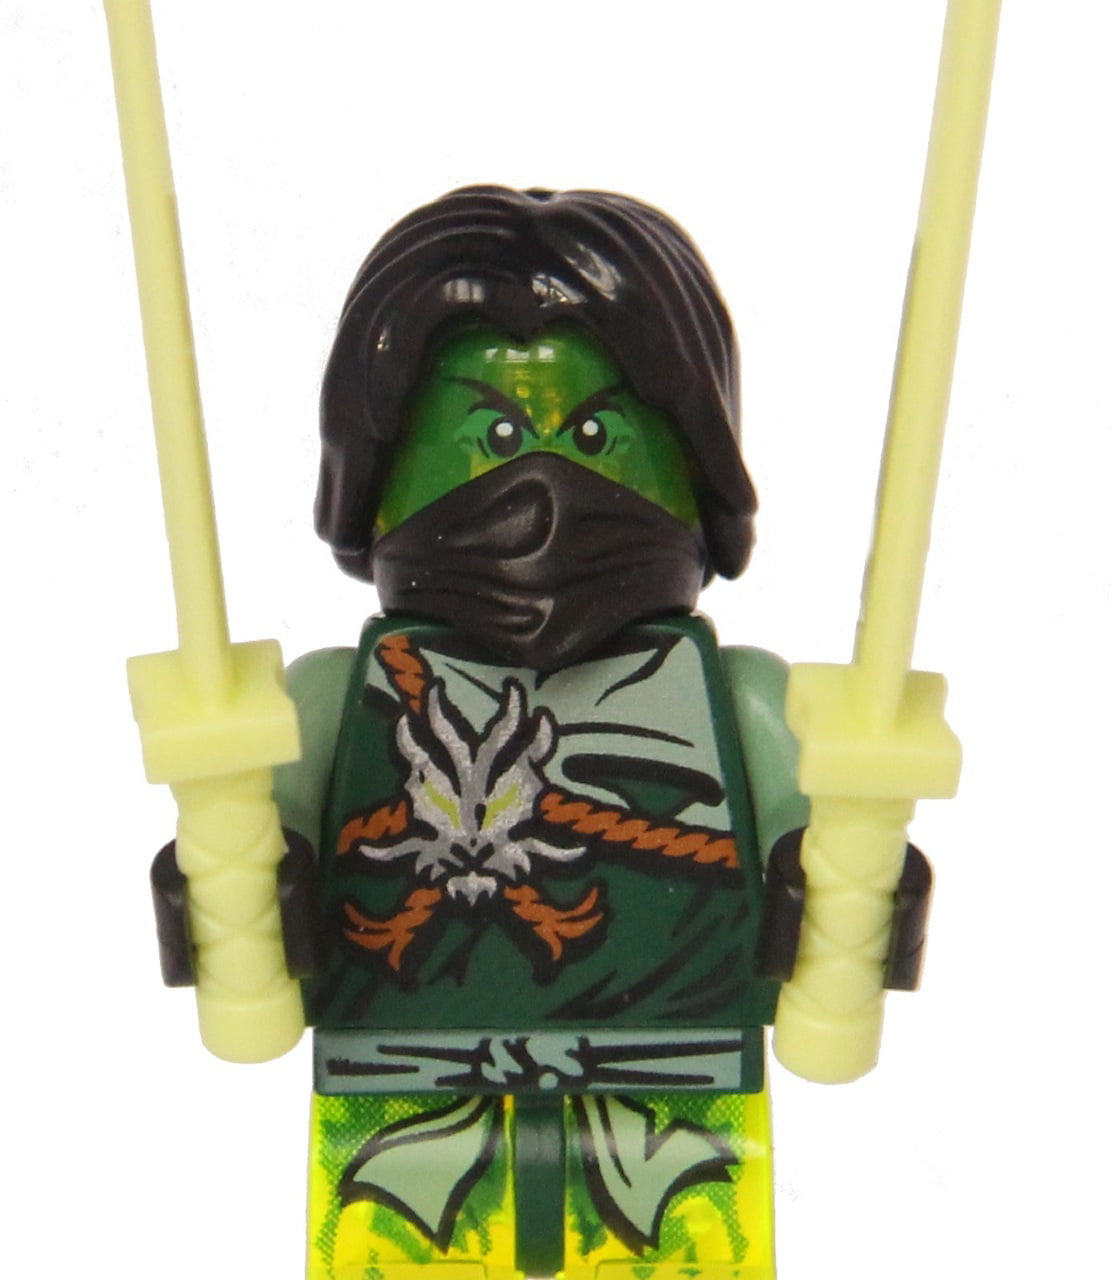 lego ninjago morro ghost minifig with dual swords